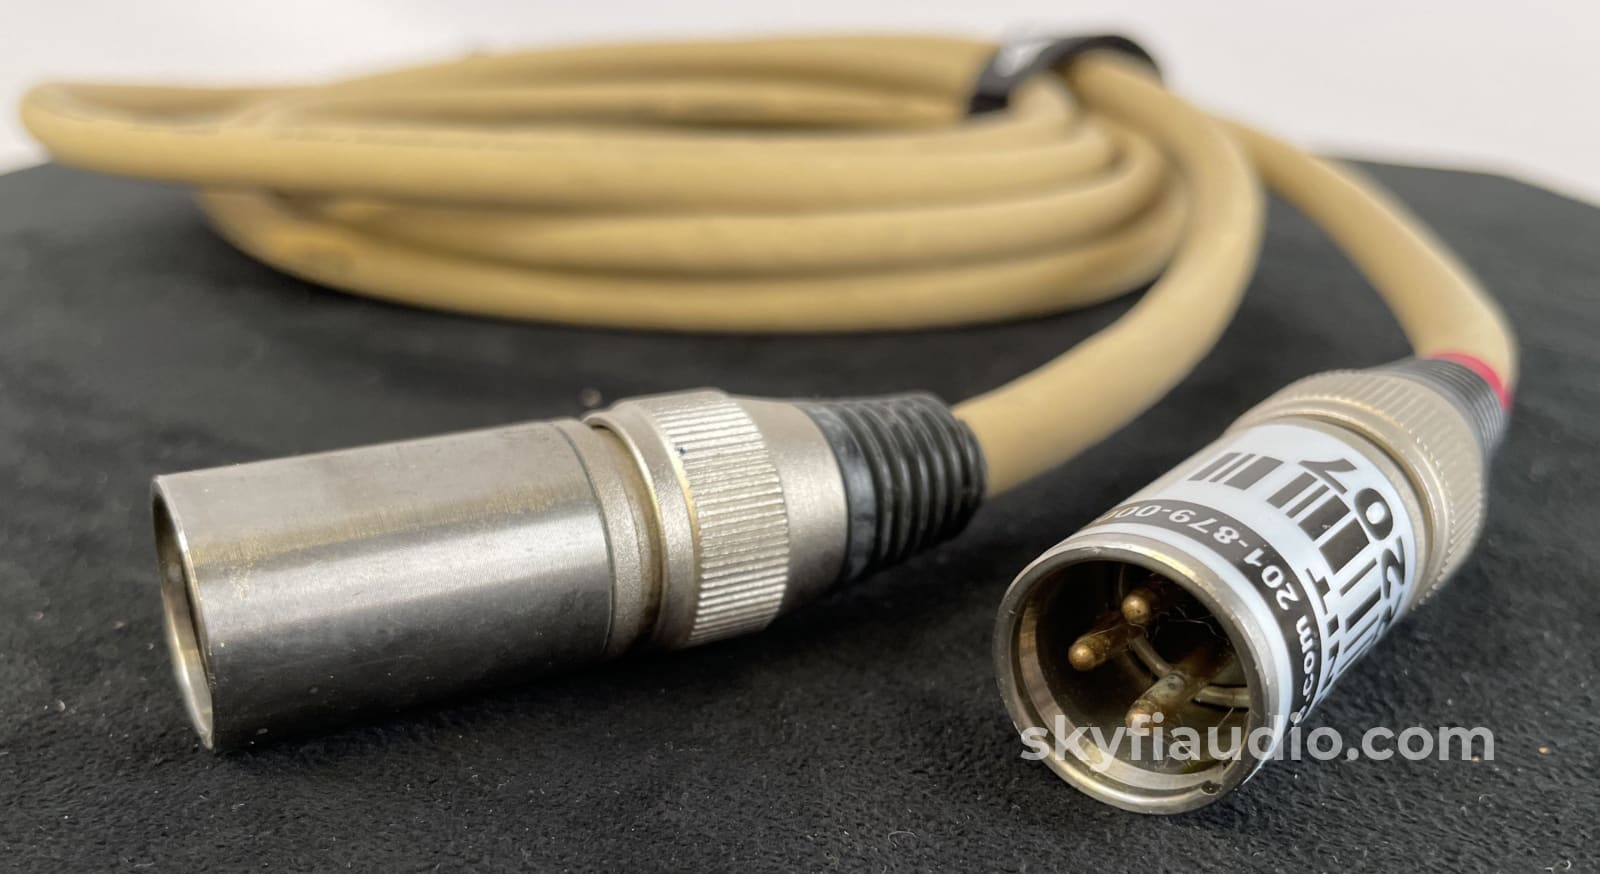 Mit (Music Interface Technologies) Mi-330 Xlr Audio Cable - Vintage Gold 2M Cables